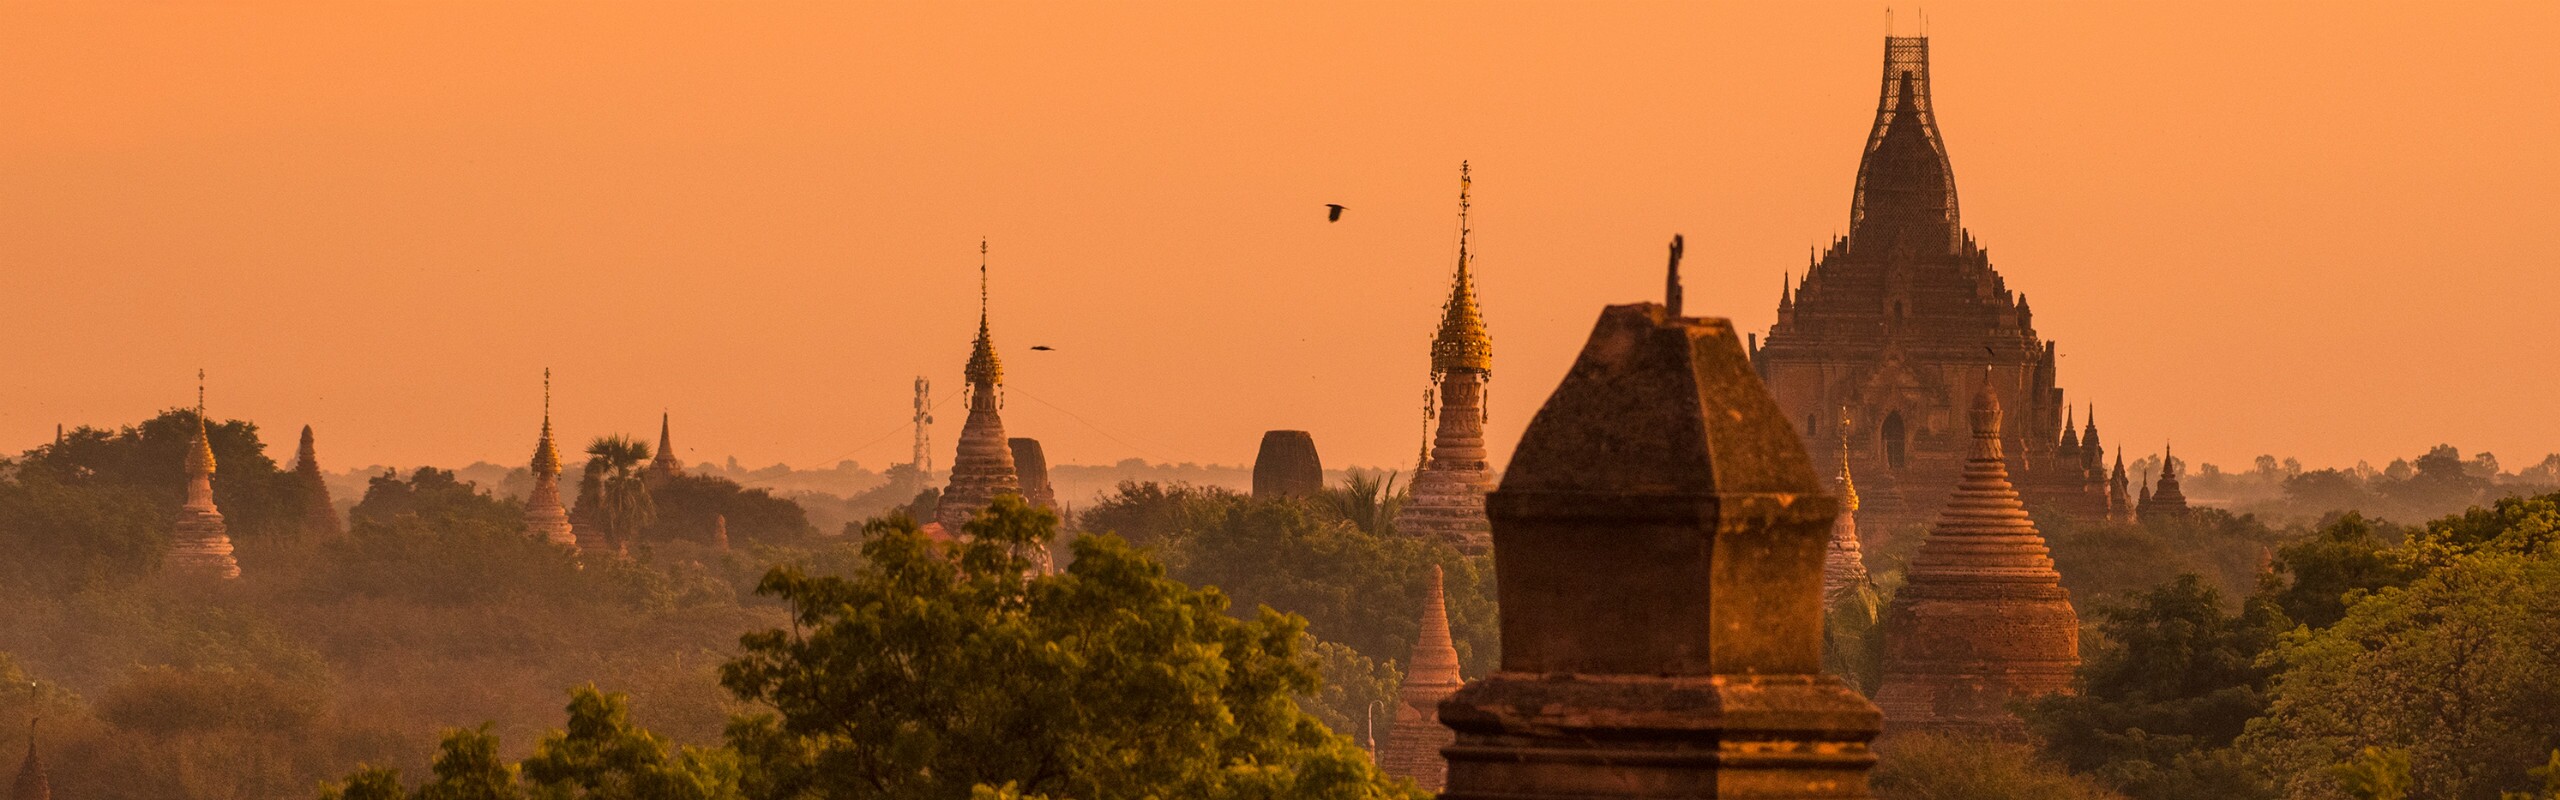 December Weather in Bagan - The Peak Travel Time